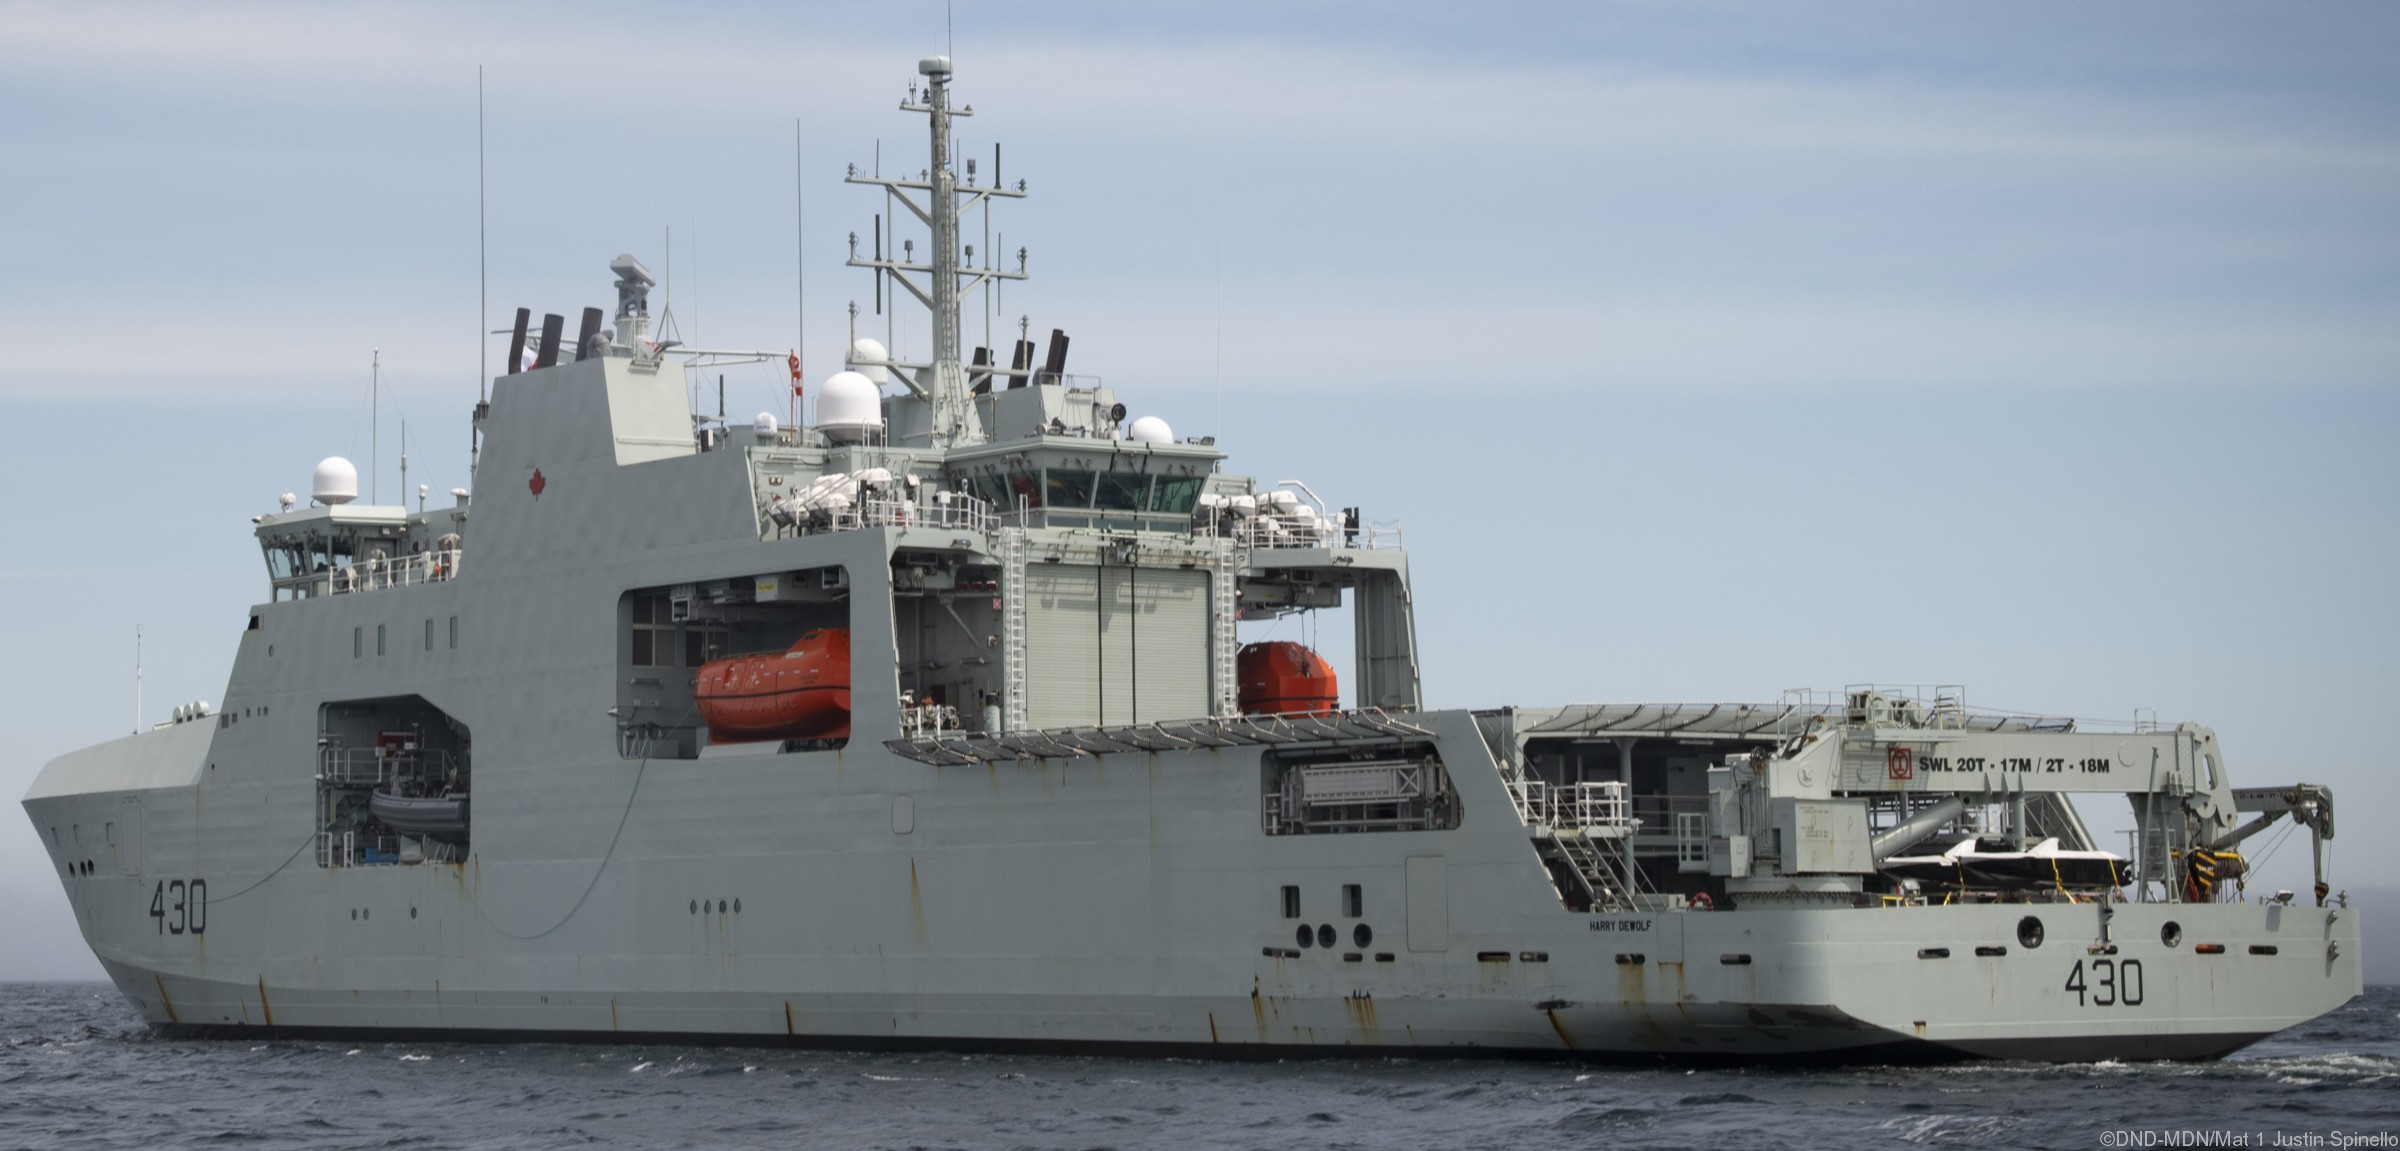 aopv-430 hmcs harry dewolf arctic offshore patrol vessel ncsm royal canadian navy 06